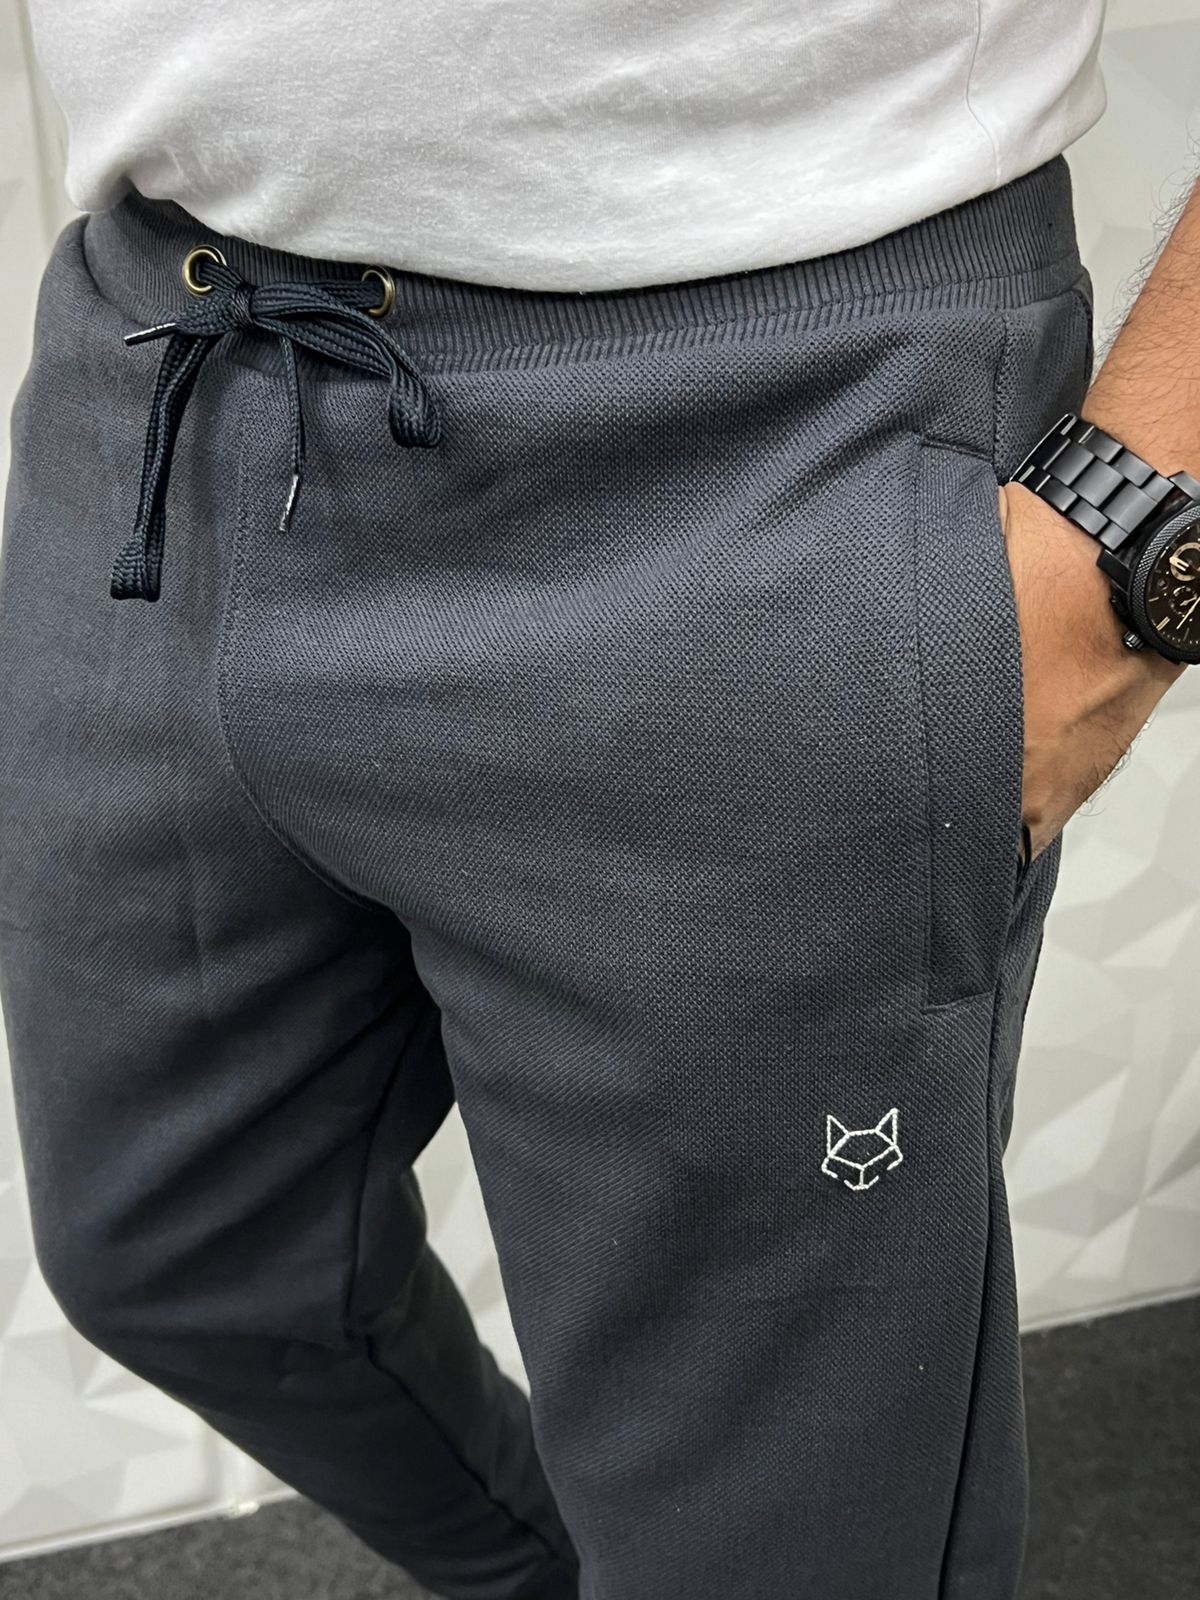 Jute fabric grey track pant ( Charcoal grey )